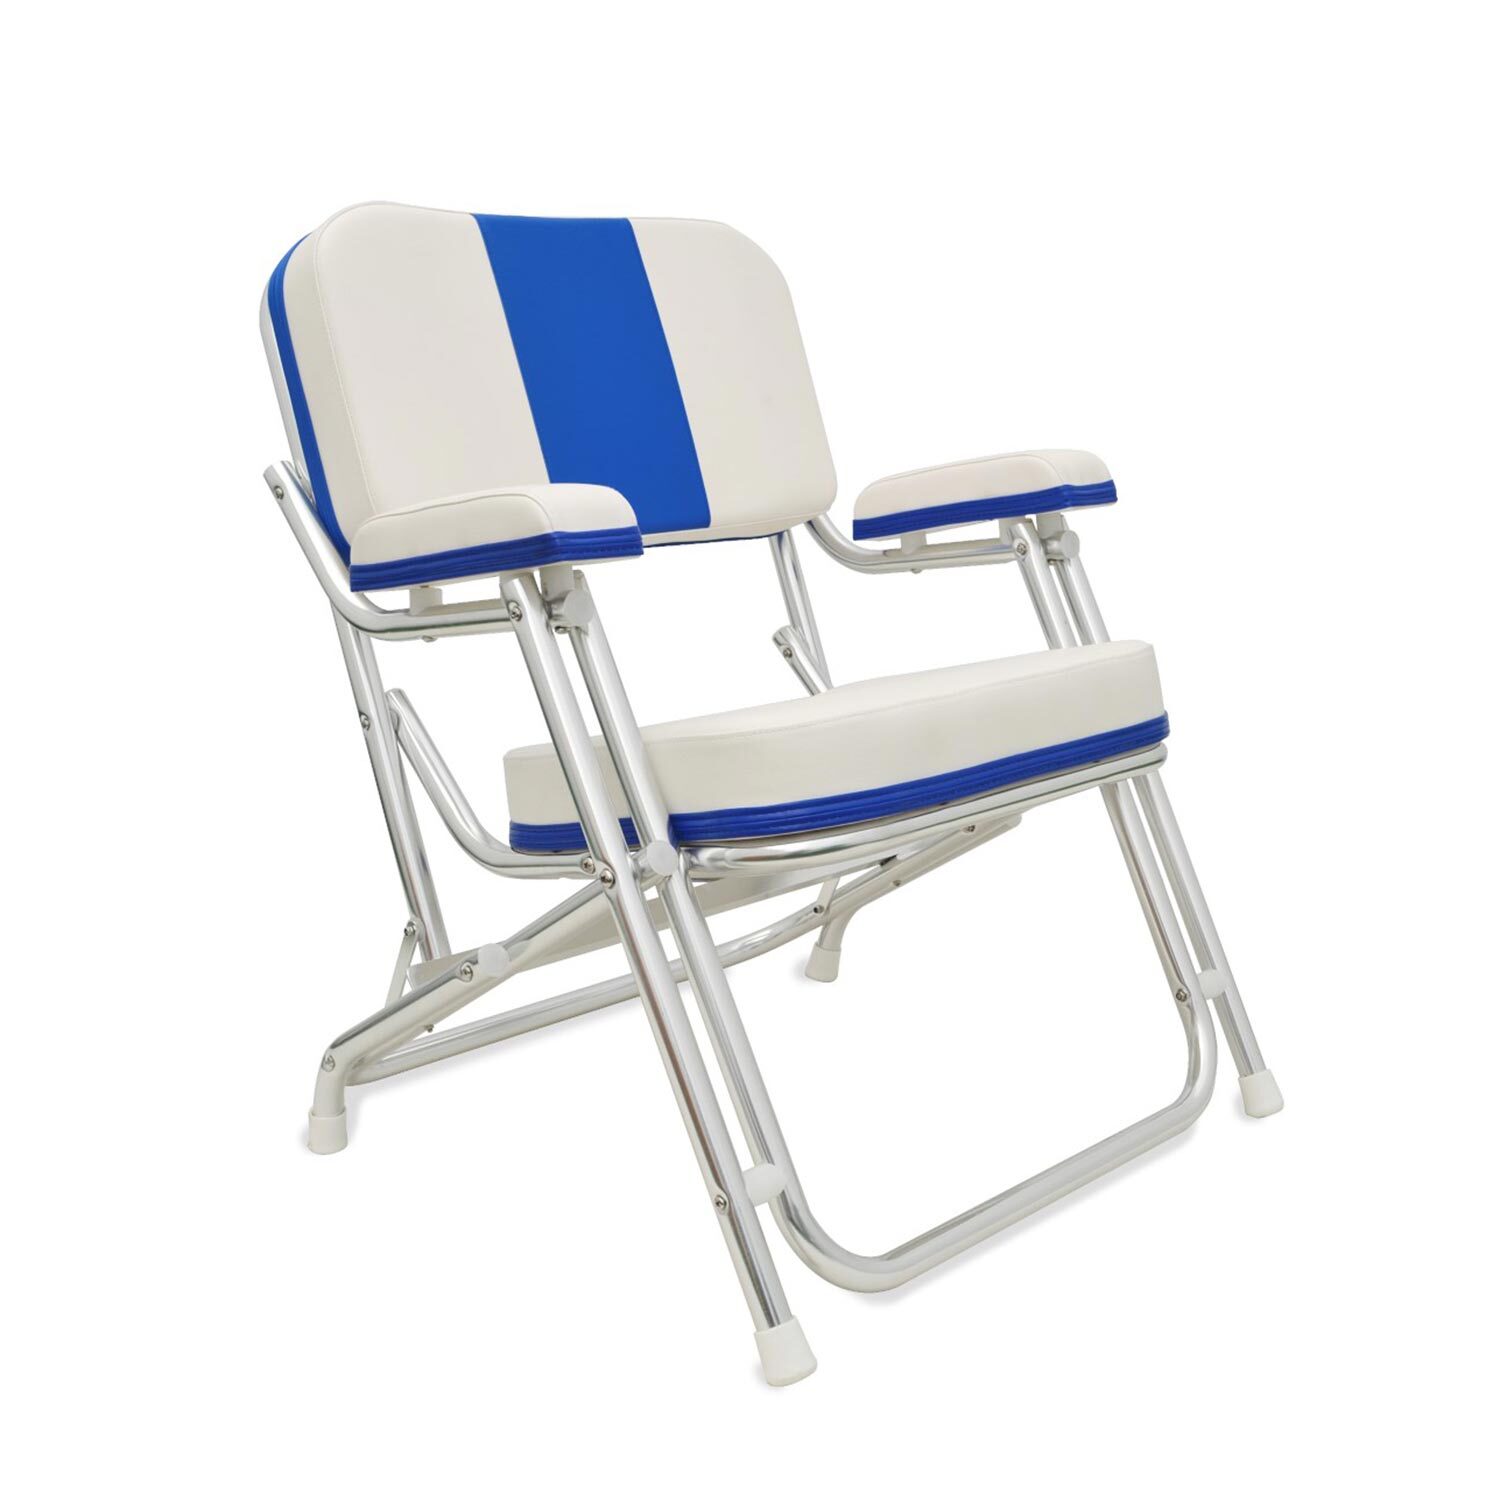 WEST MARINE Kingfish II Deck Chair, Blue Back, Clear Anodized